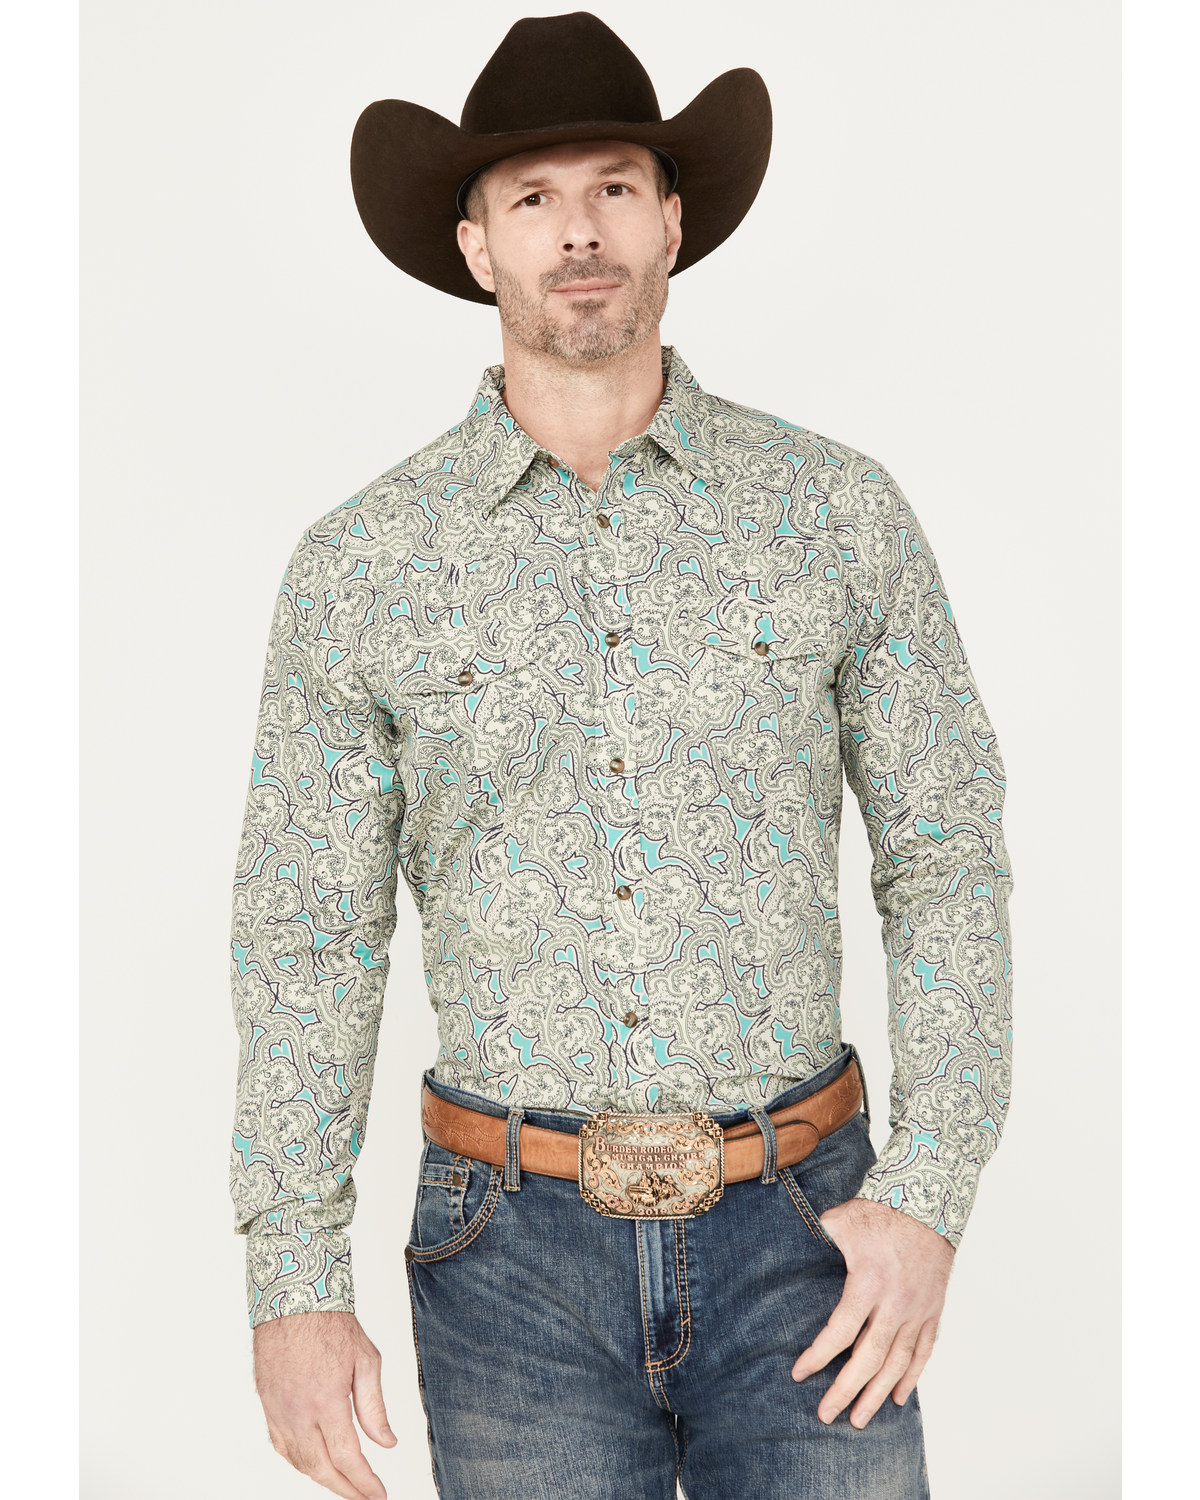 Gibson Trading Co. Men's Jackpot Paisley Print Long Sleeve Western Snap Shirt